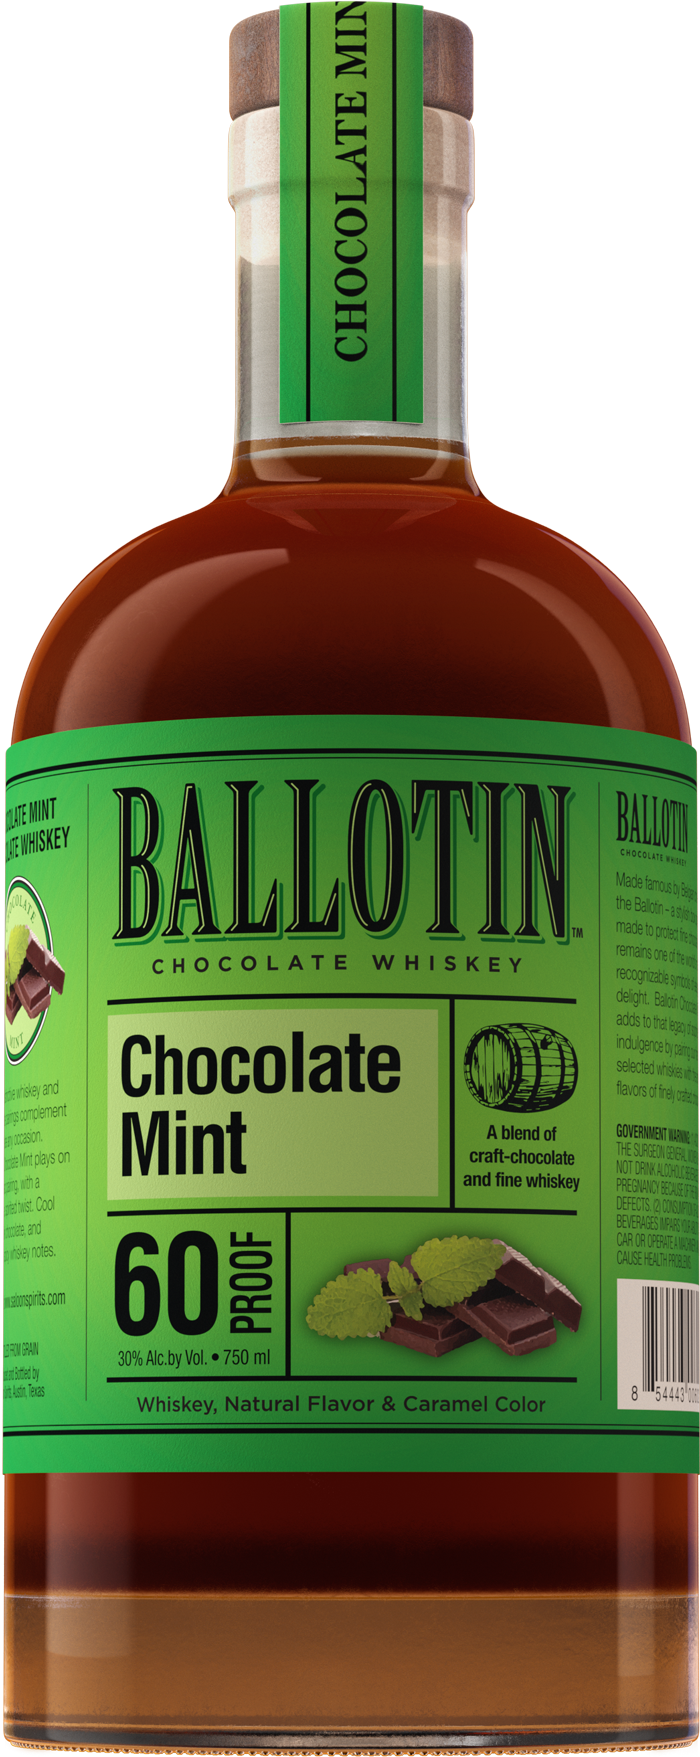 BALLOTIN CHOCOLATE MINT WHSKY Flavored Whiskey BeverageWarehouse